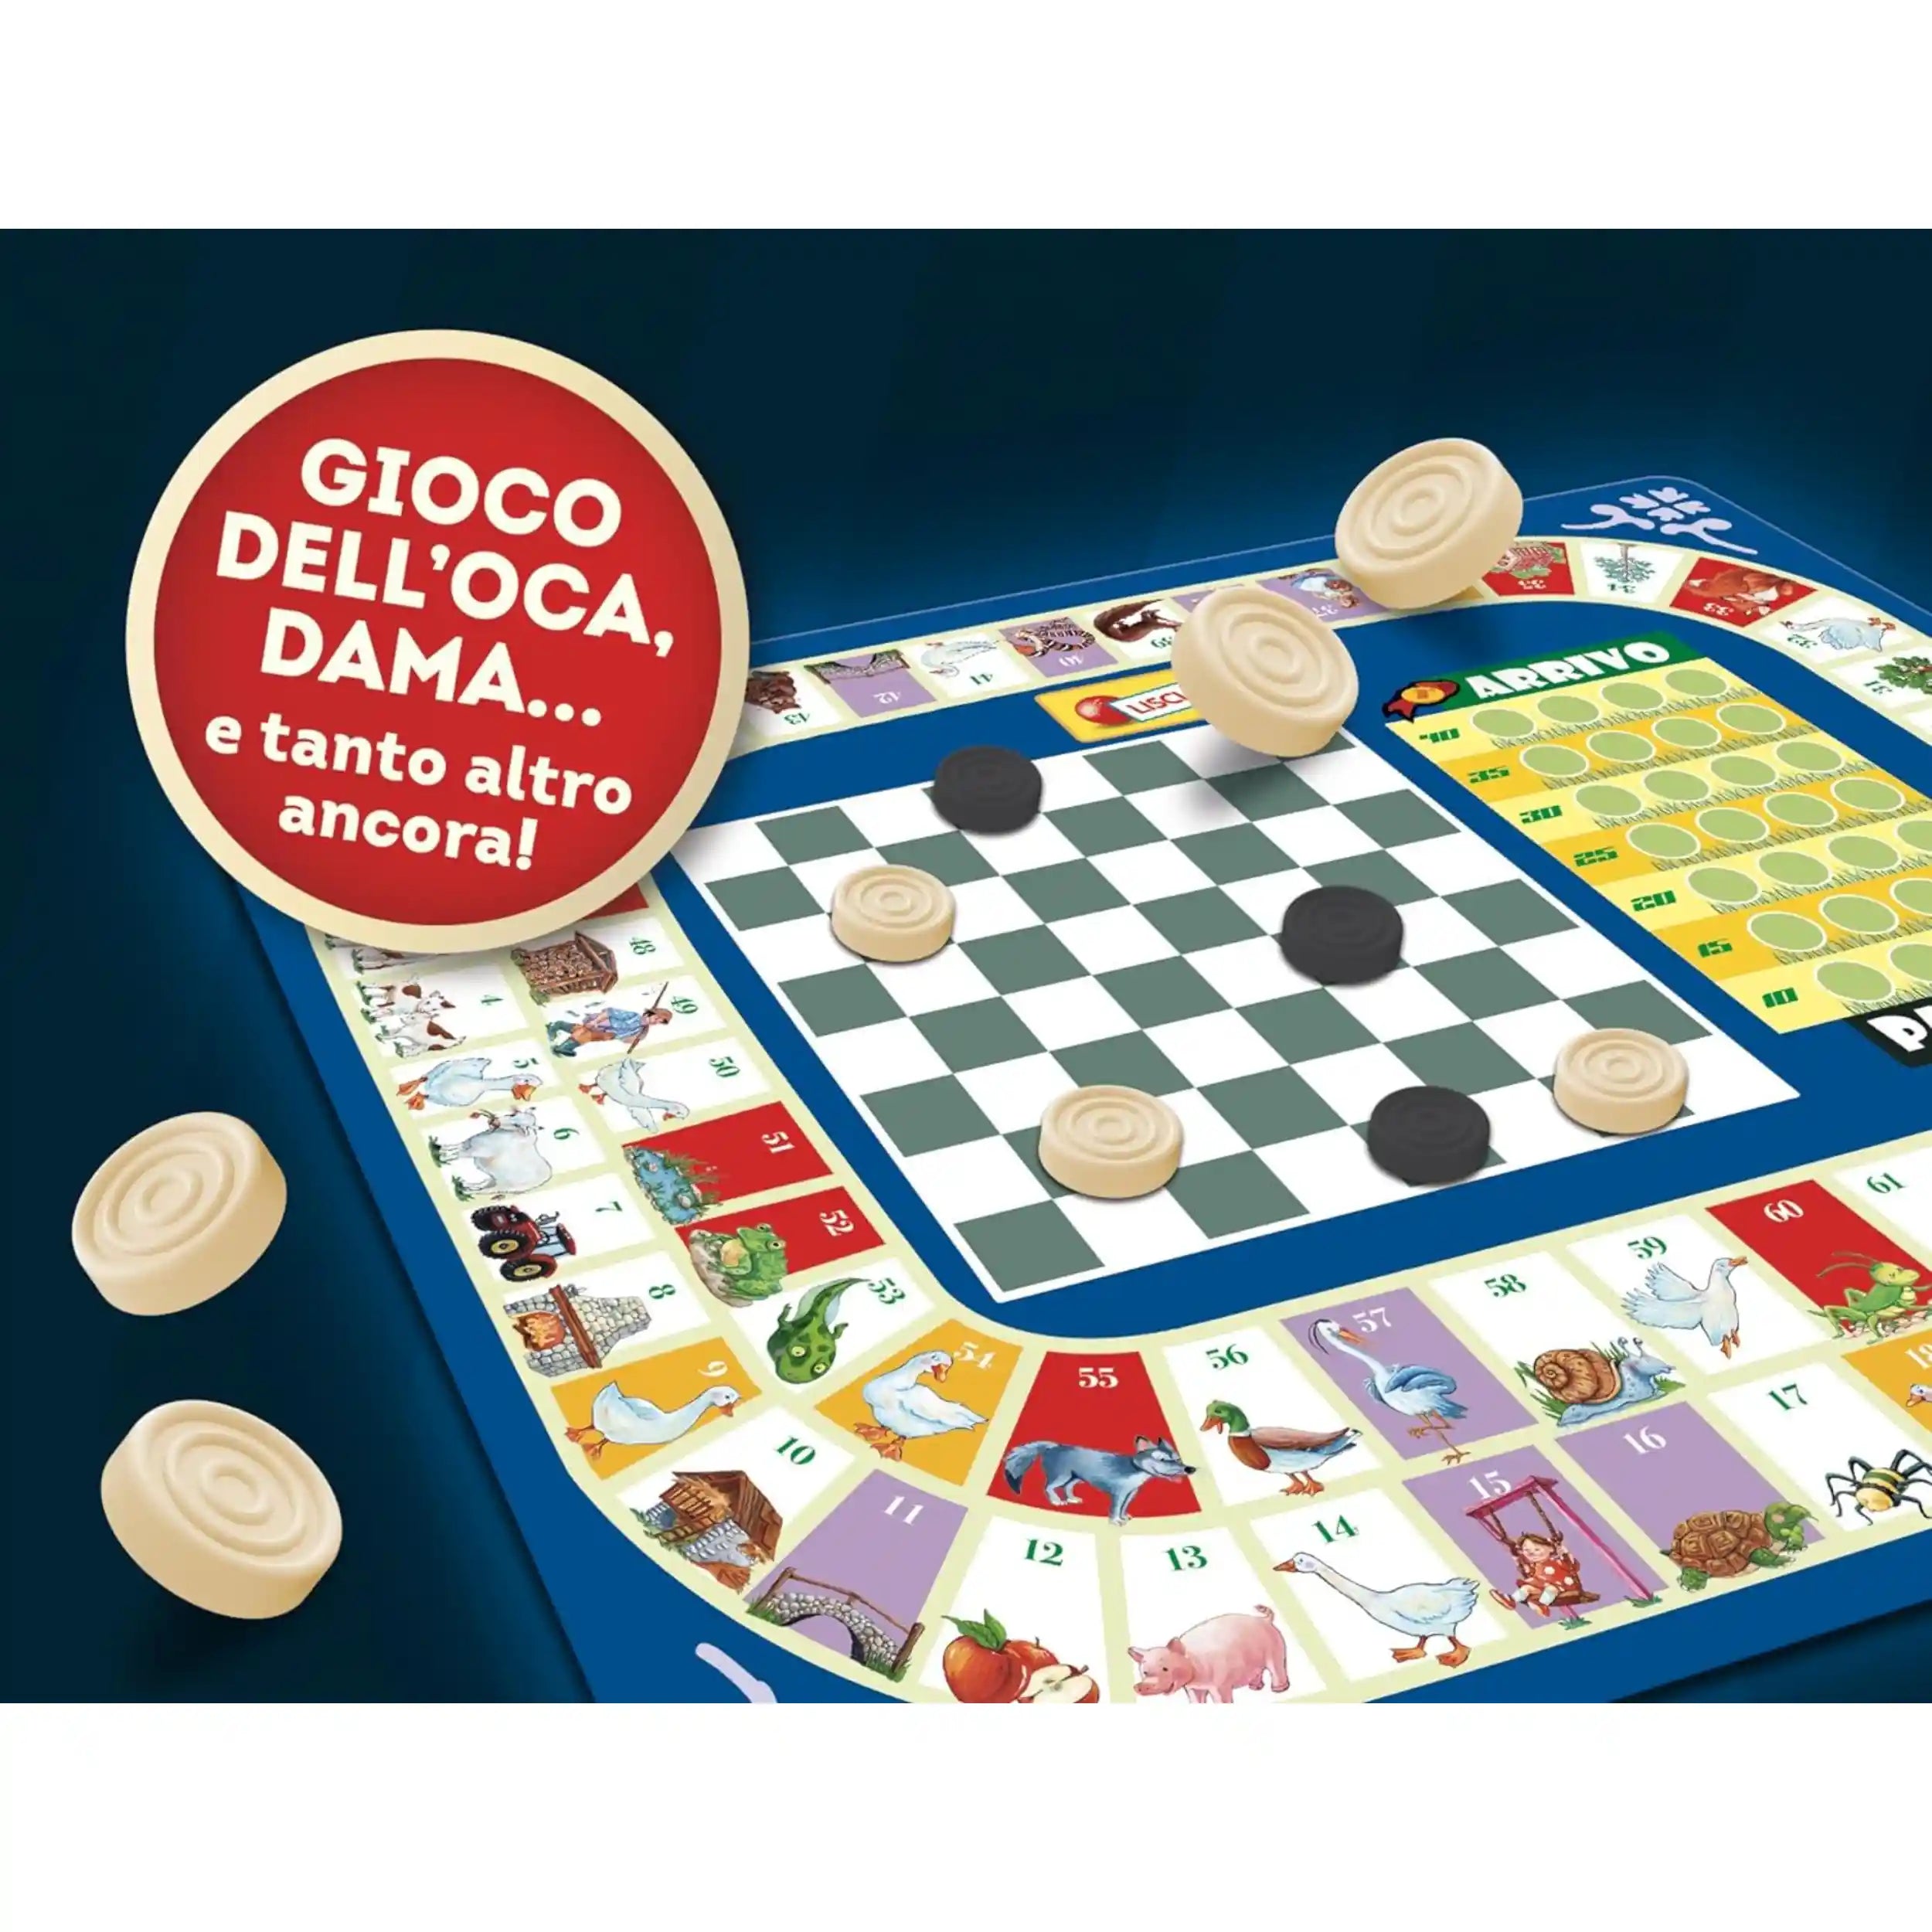 LISCIANI - Crazy Games Serie Tv - Board Game